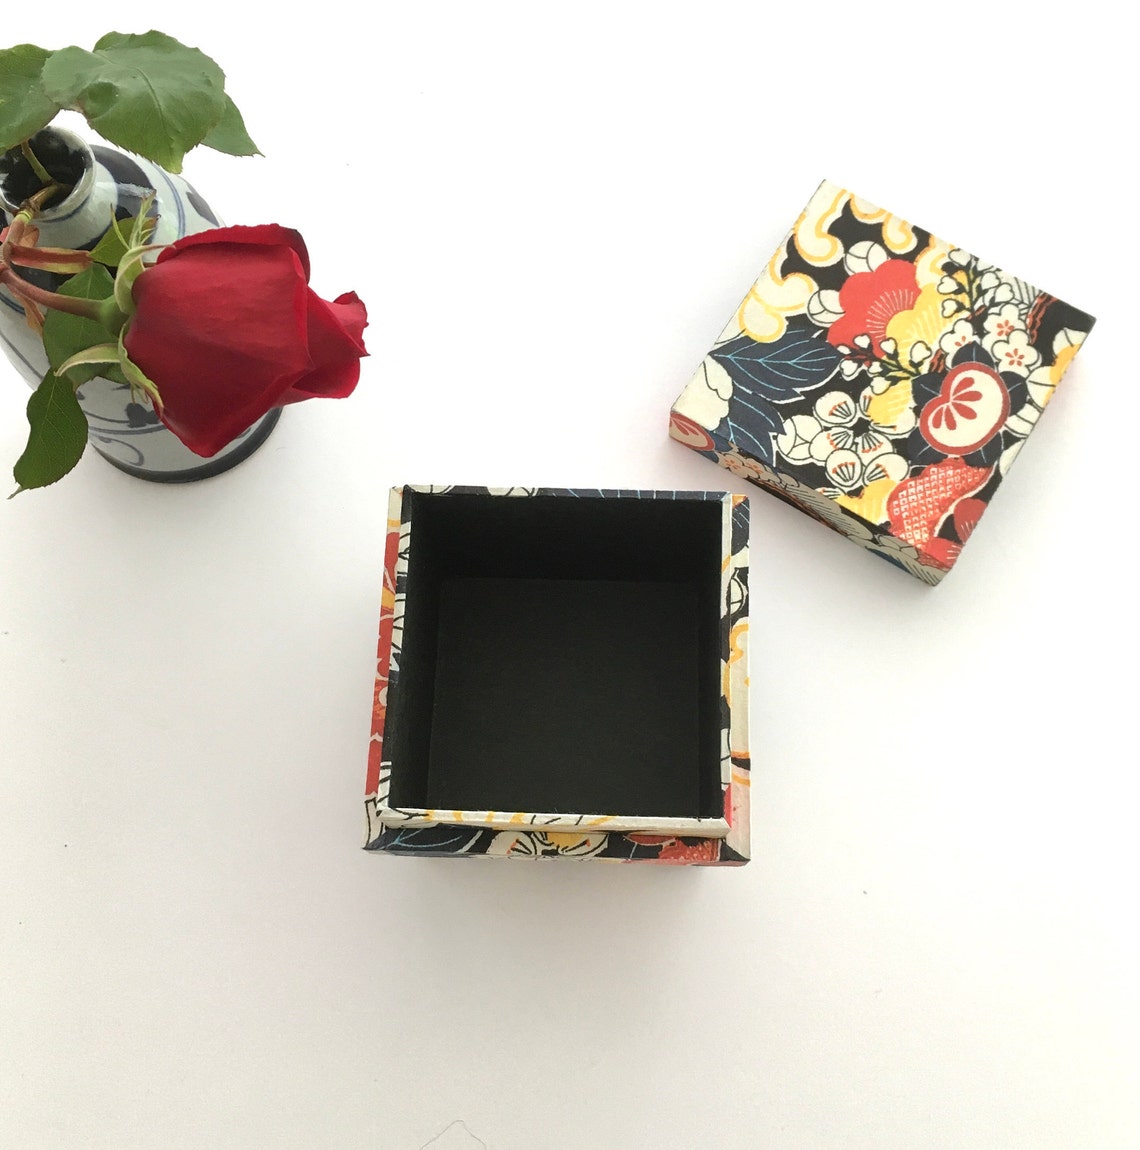 Handmade Japanese jewellery box 10cmx 10cm x 8.5cm | Etsy